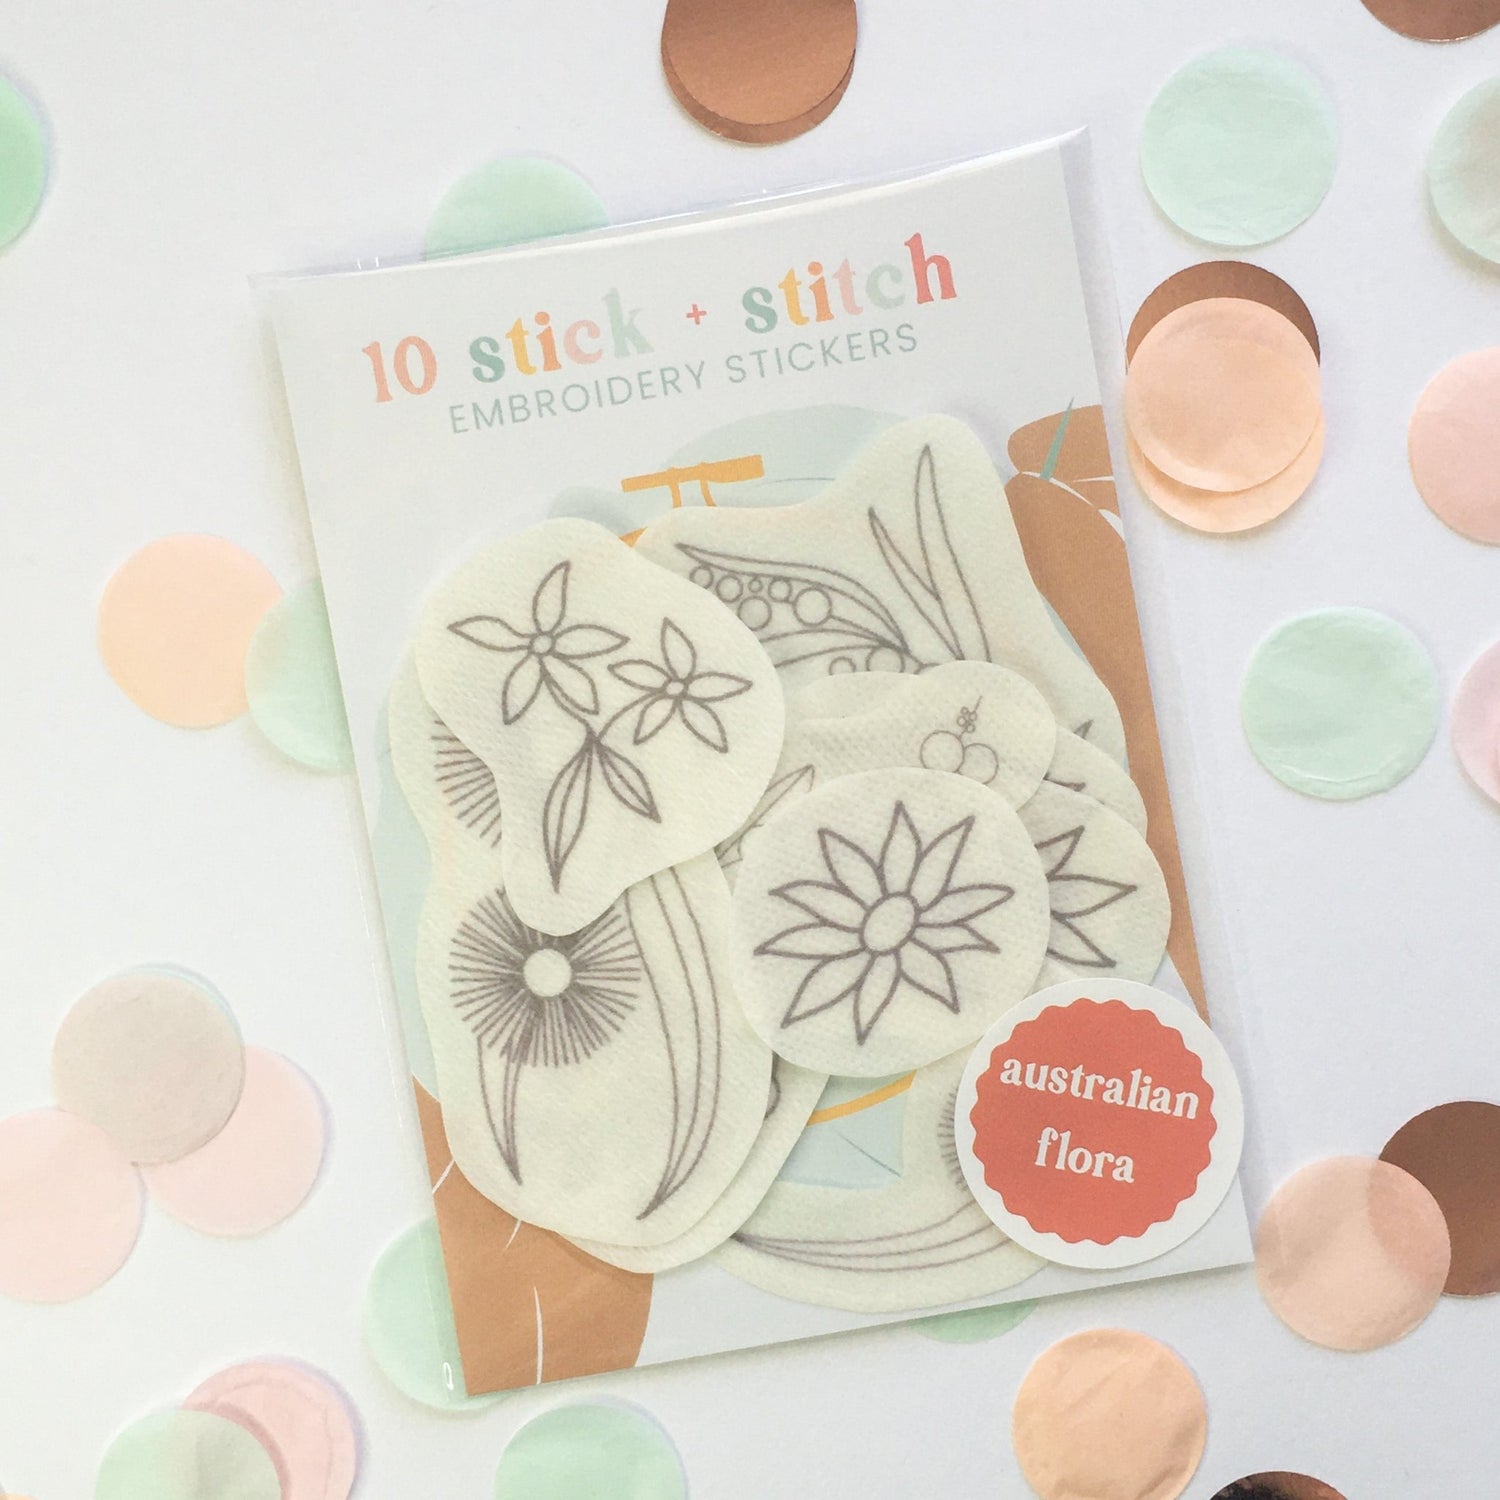 Australian Flora Stick and Stitch Embroidery Stickers - Craft Make Do